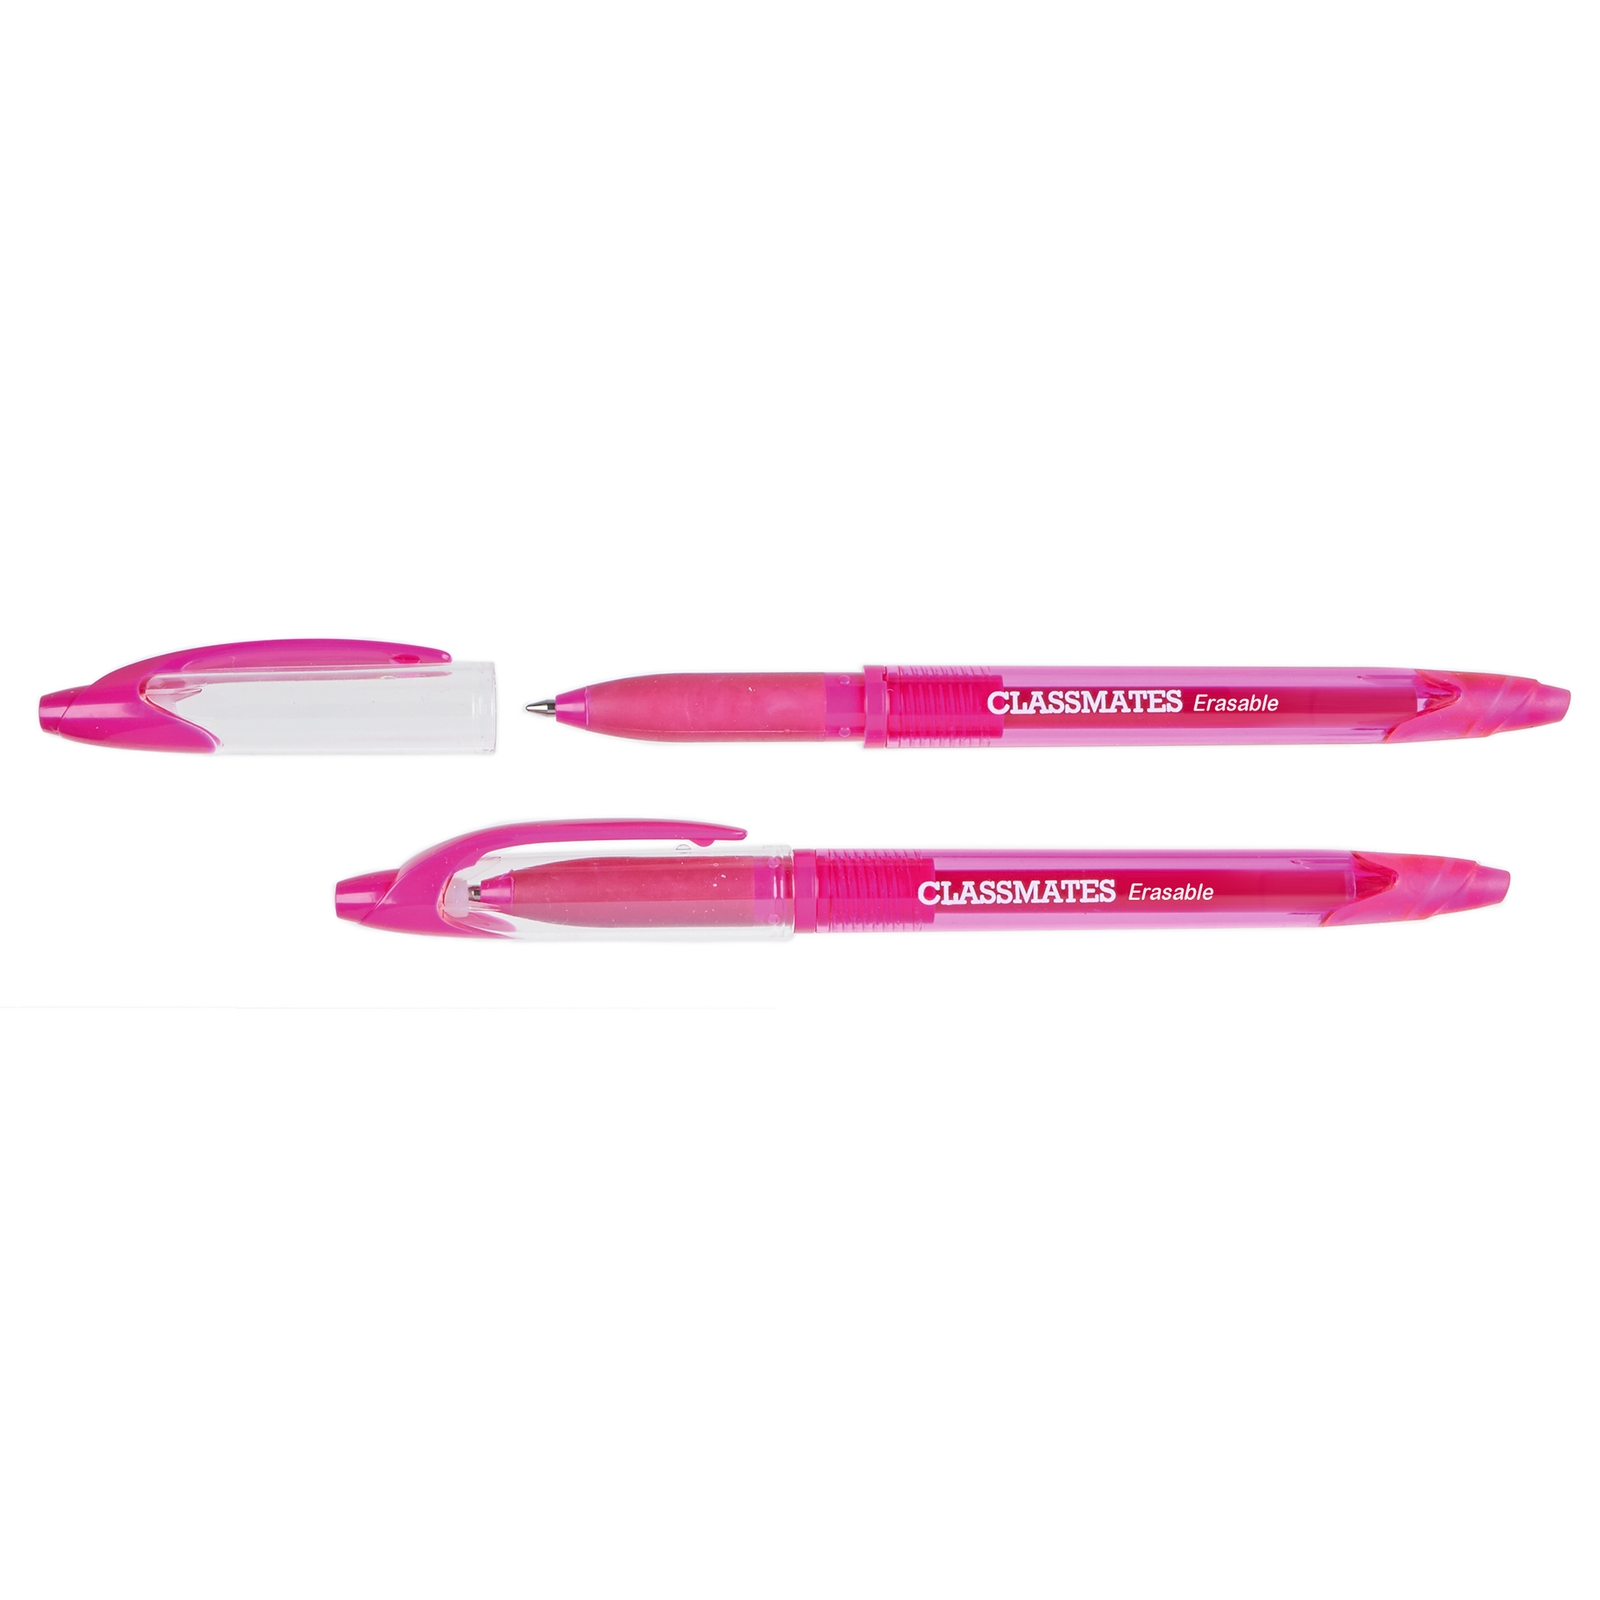 Classmates Erasable Rollerball Pen - Pink, Pack of 12